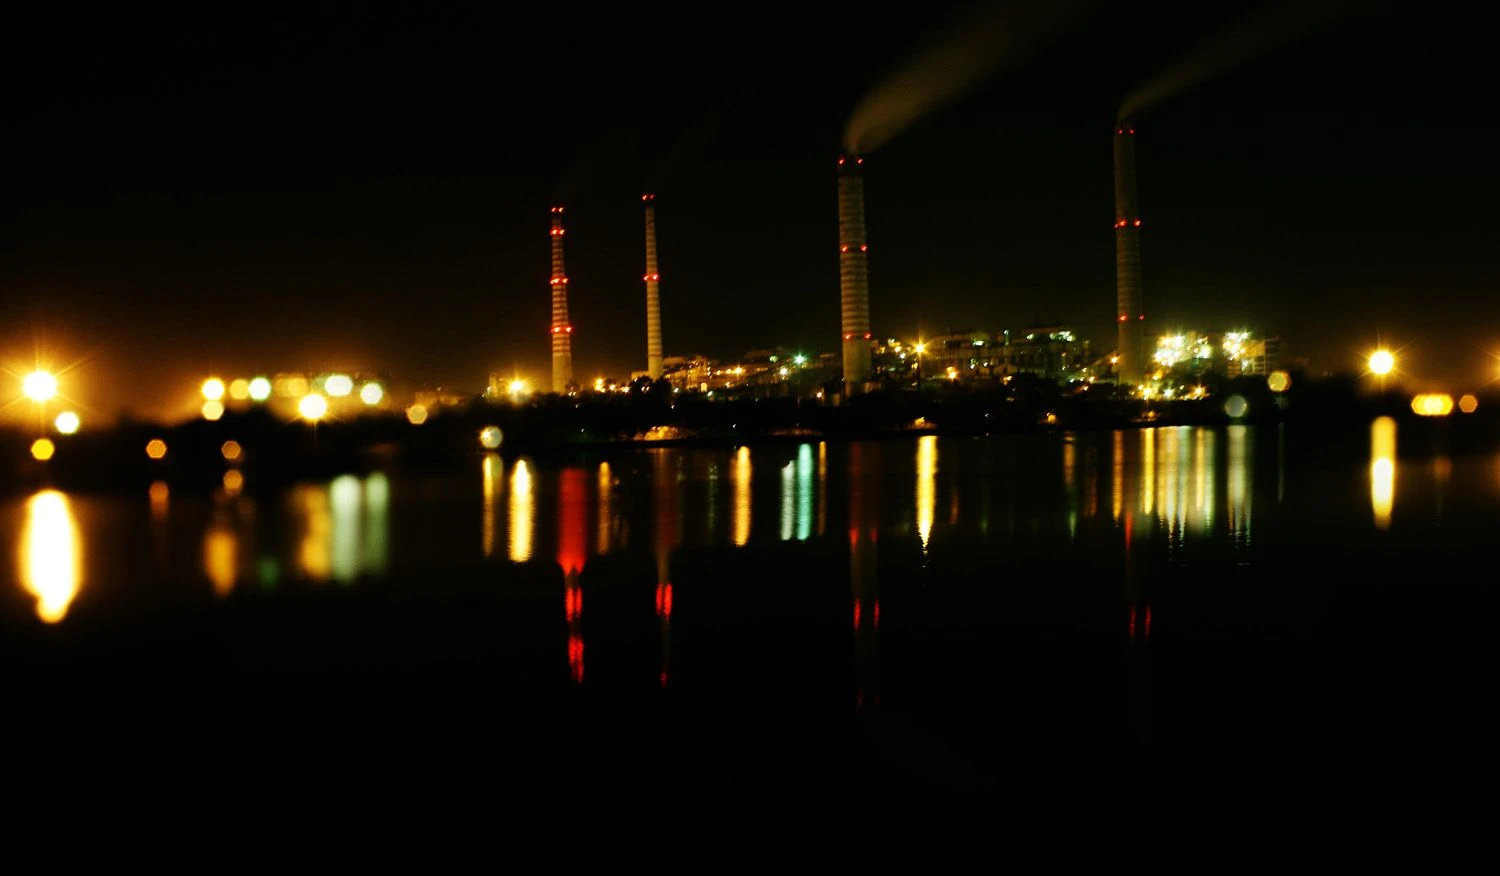  Kota Super Thermal Power Plant